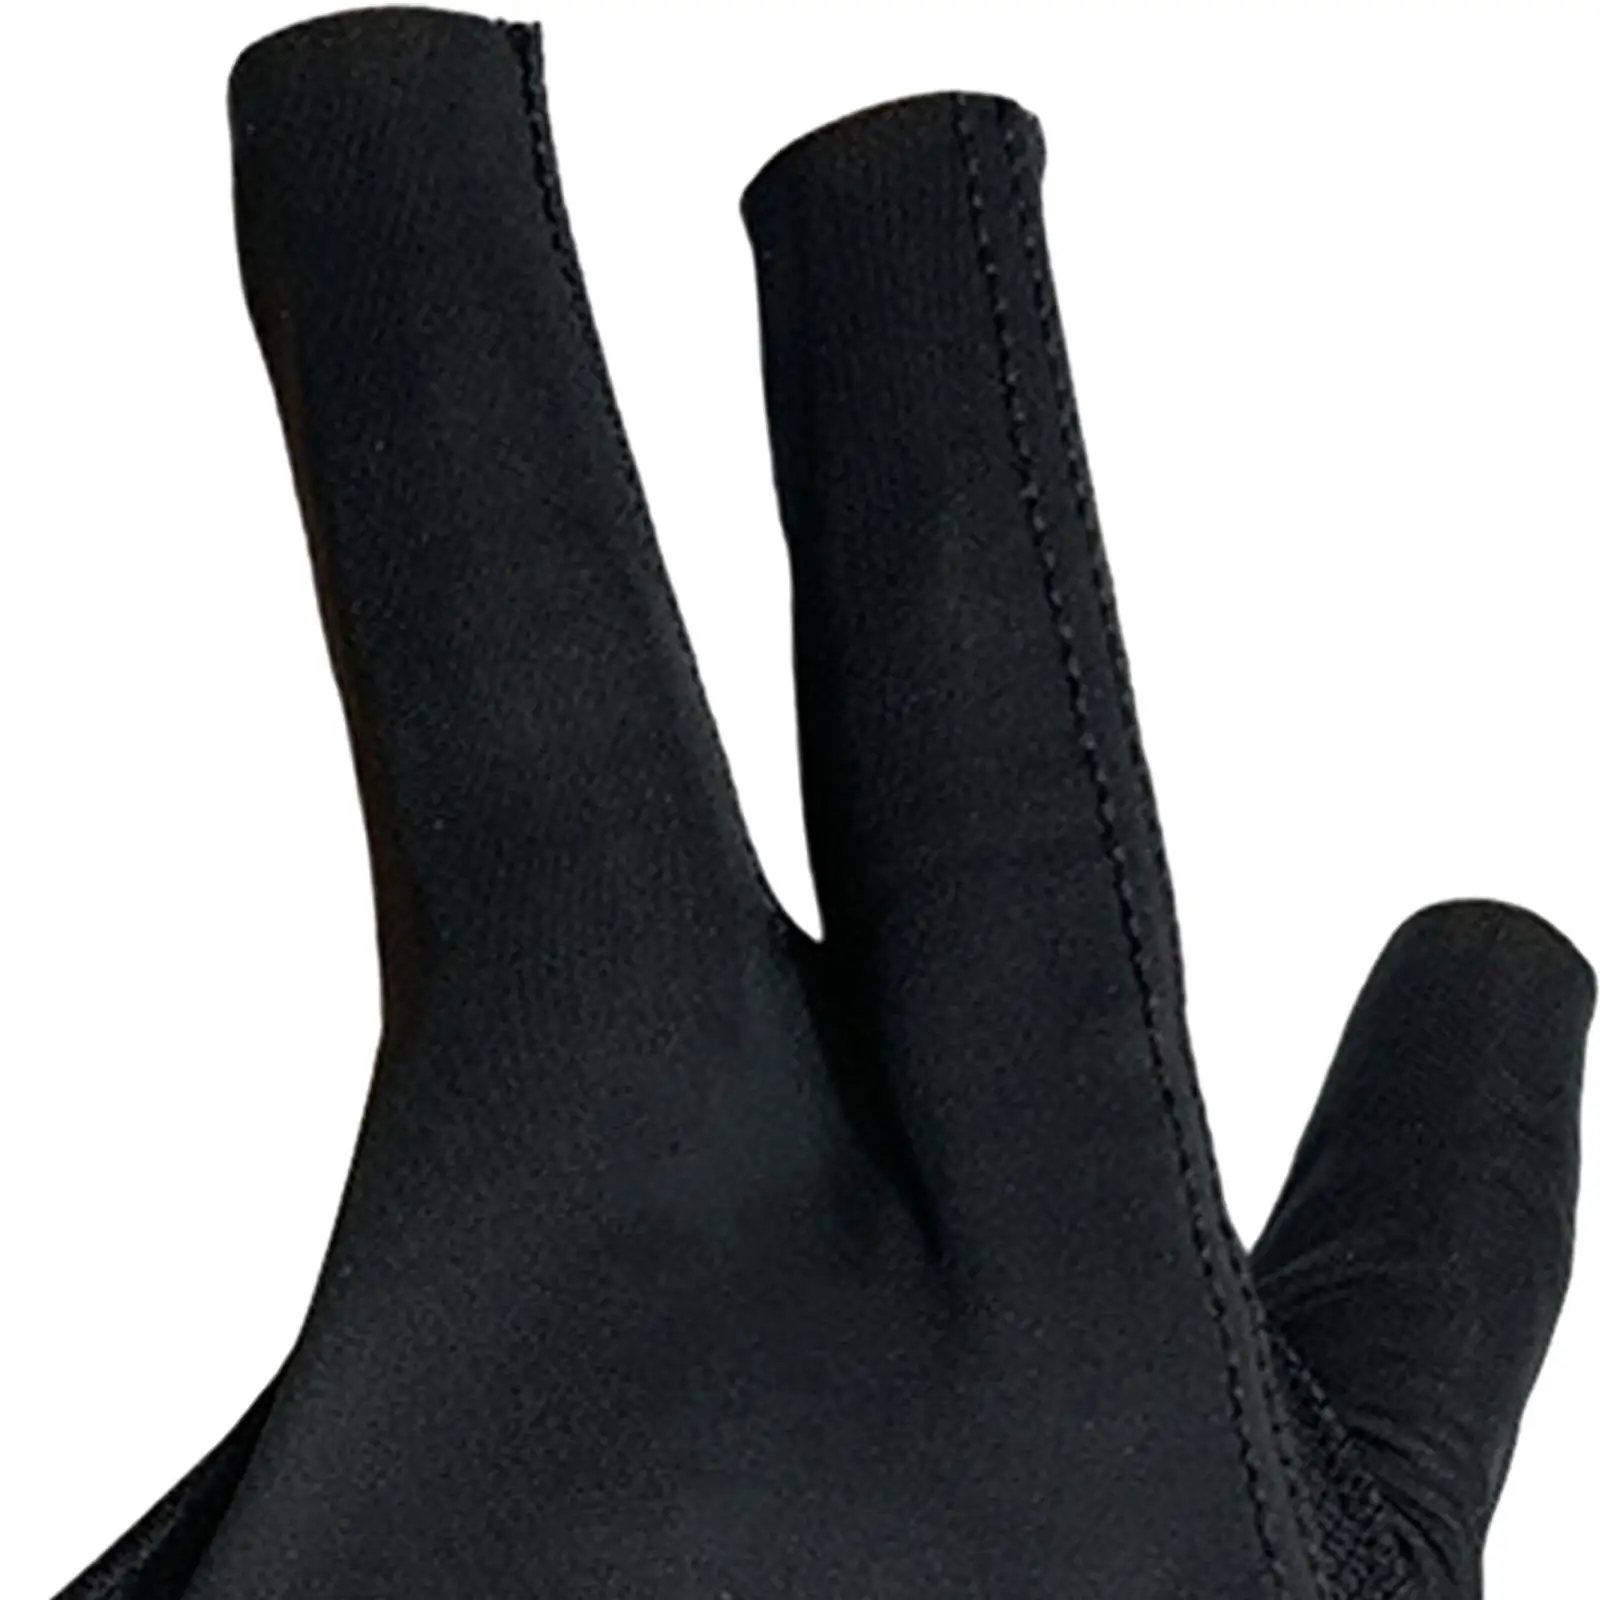 Three Fingers Billiard Glove Women Men Professional Separate Finger Gloves